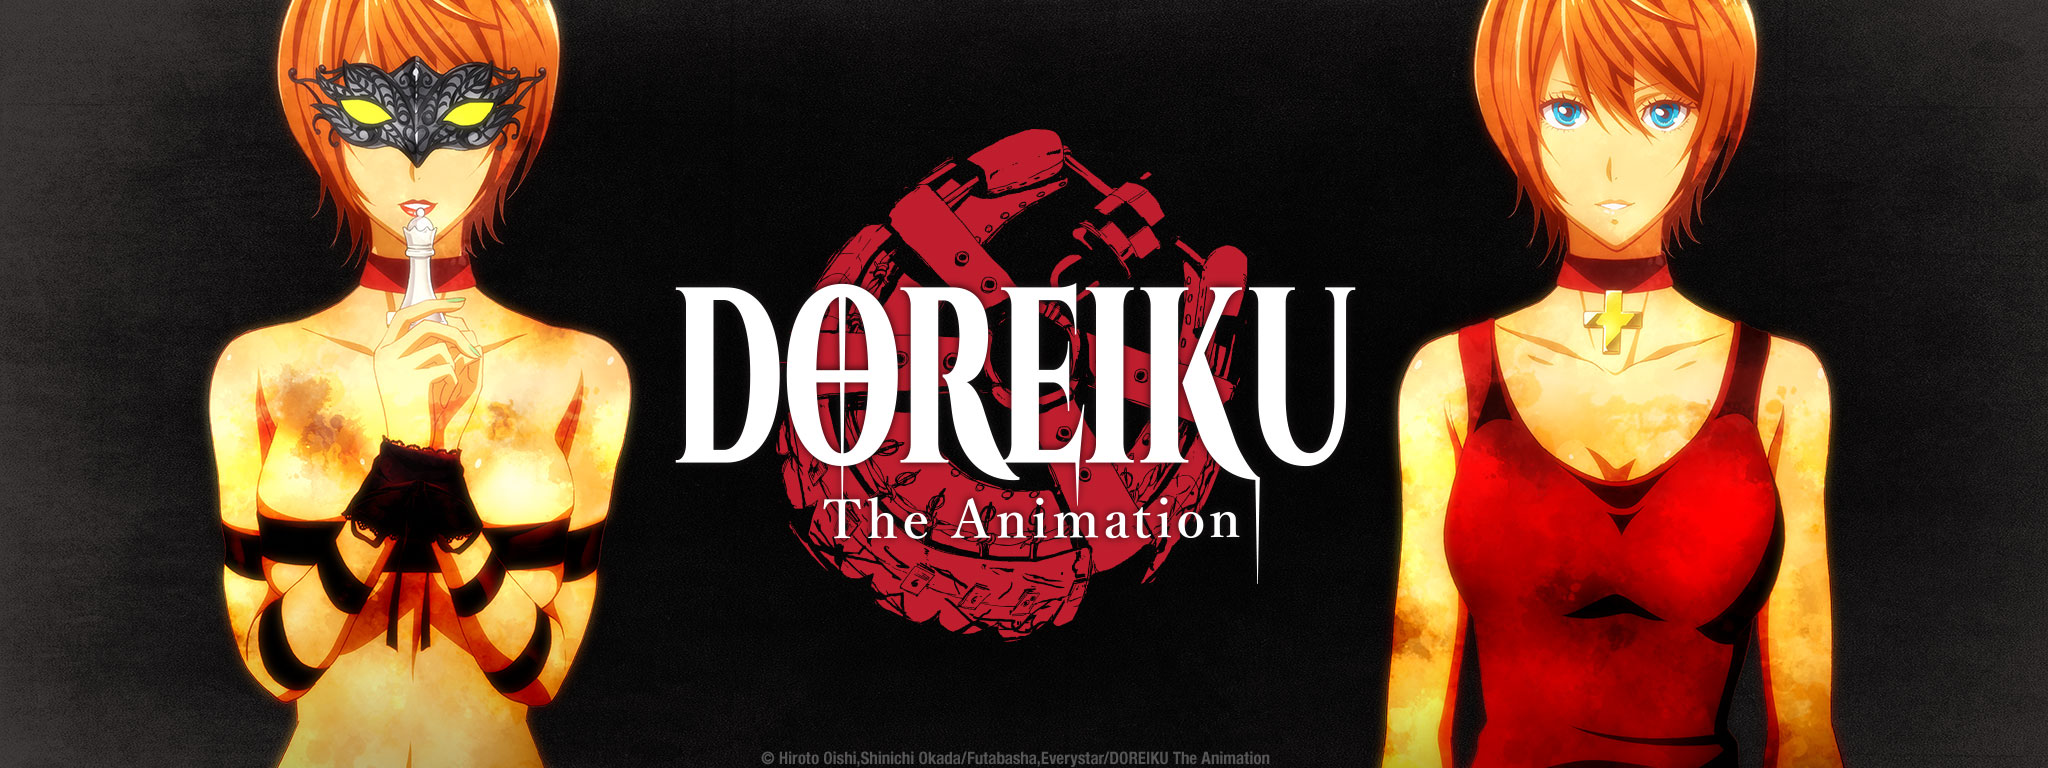 Title Art for DOREIKU The Animation